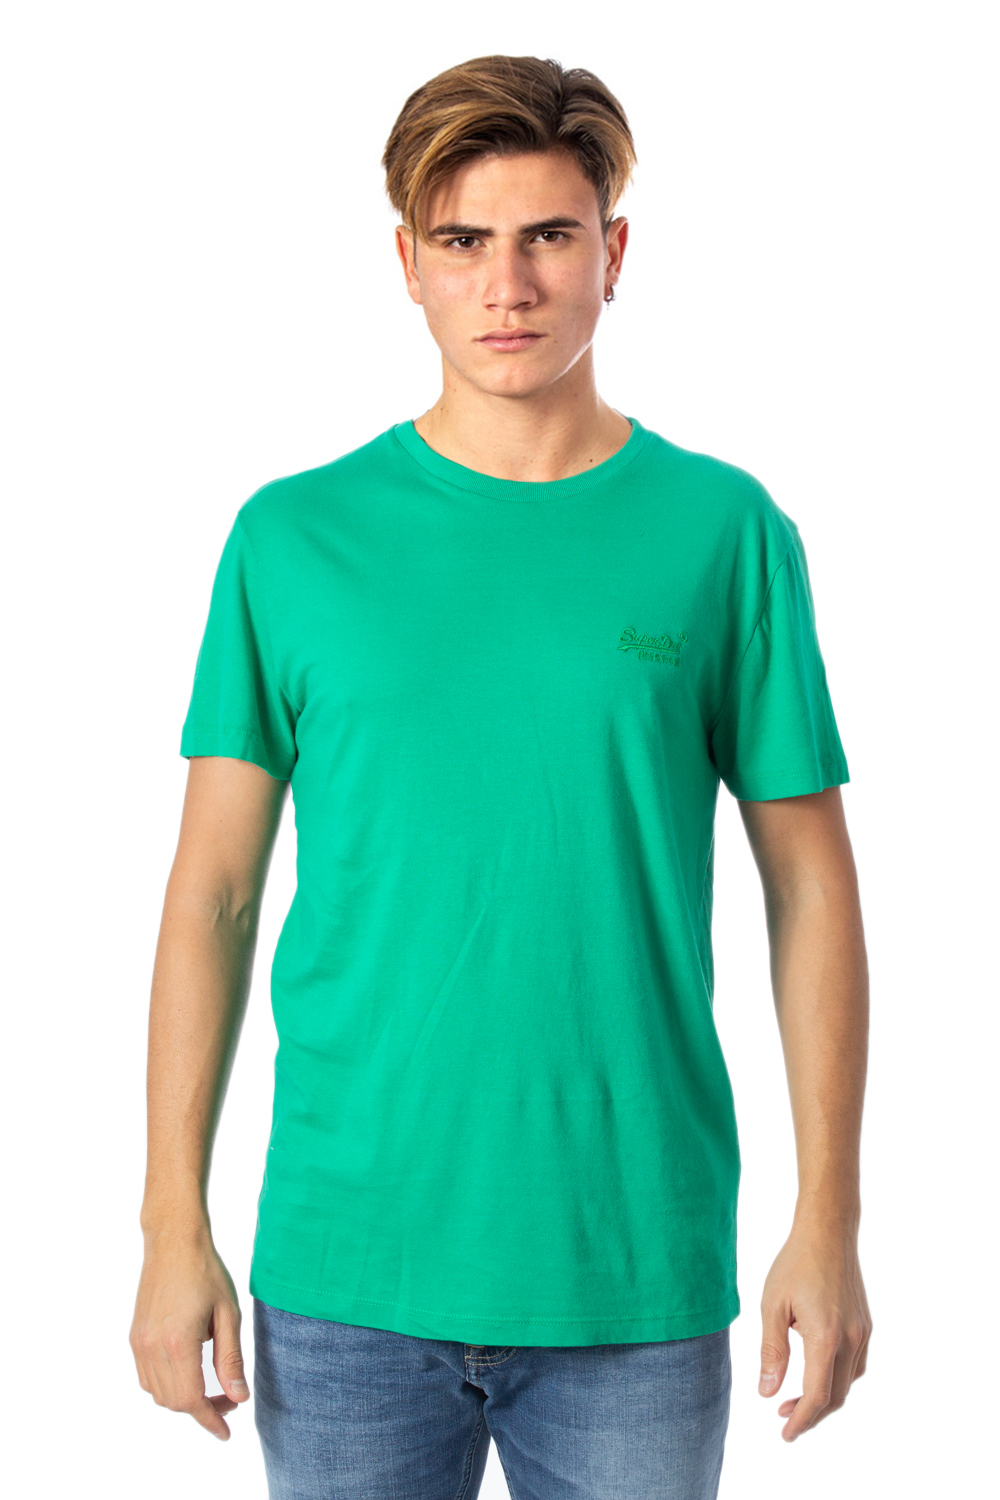 Superdry T-shirt ORANGE LABEL LITE TEE M10104MT - 1